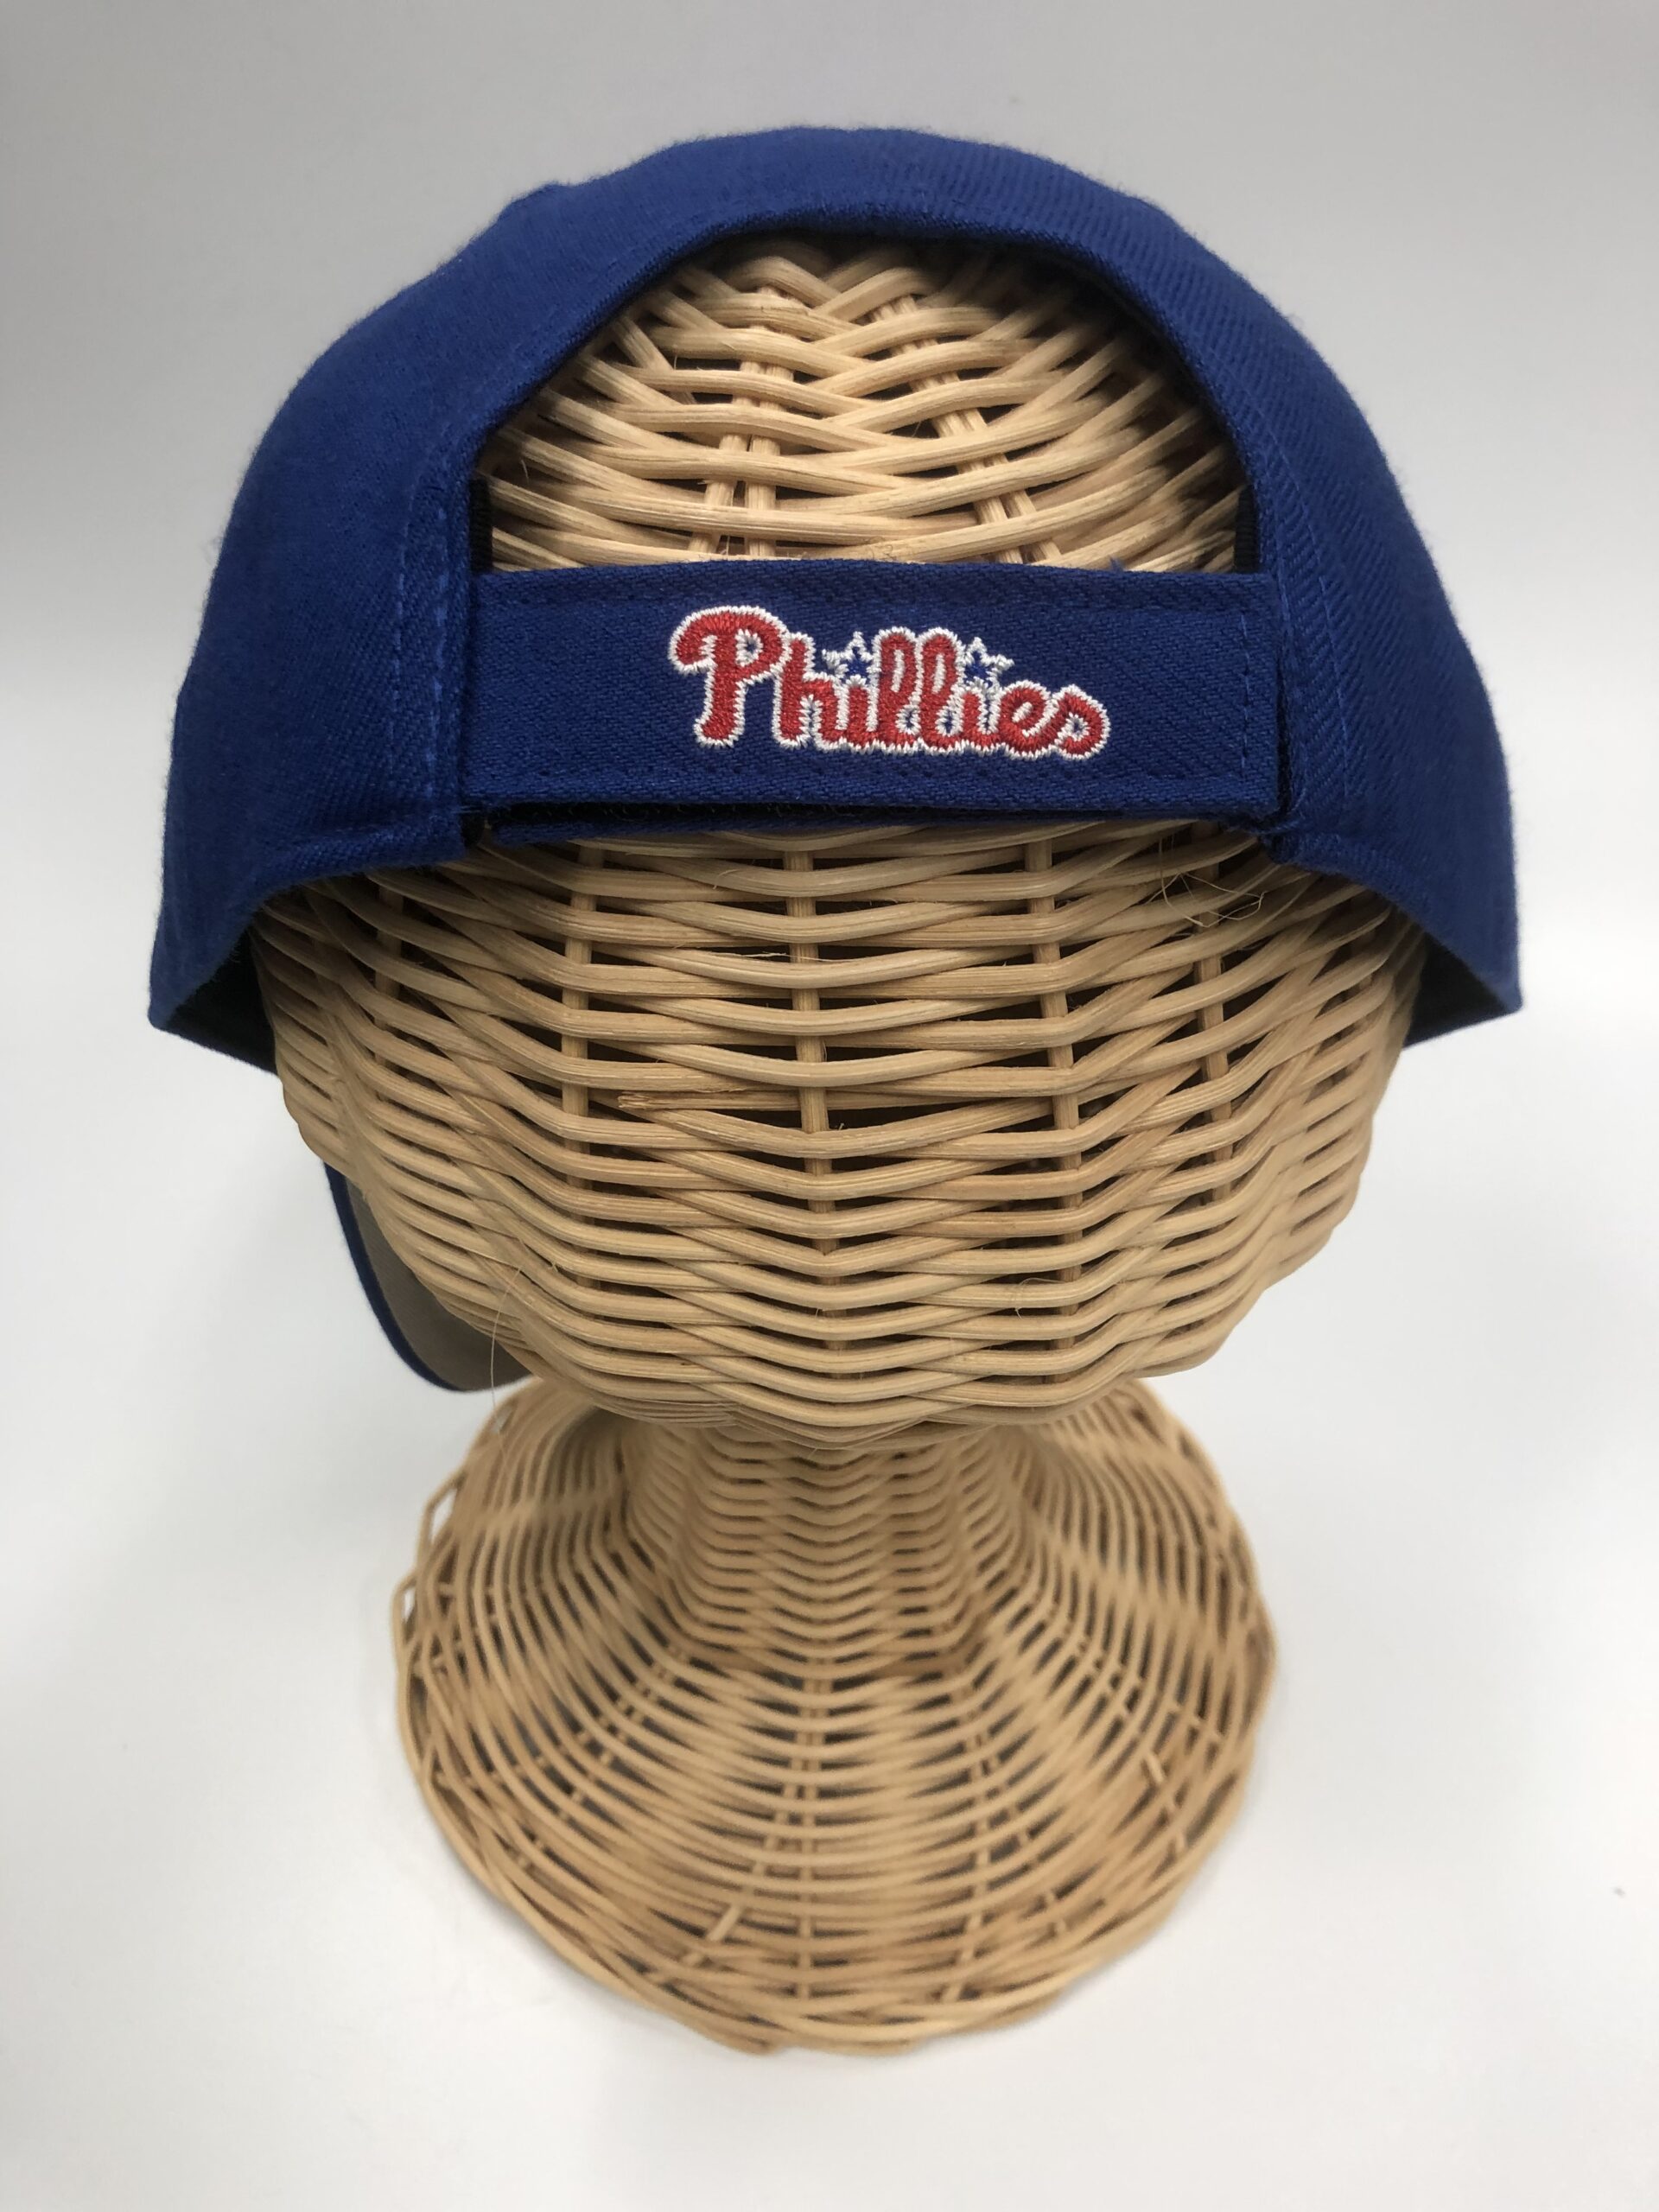 Phillies’47 MVP Royal